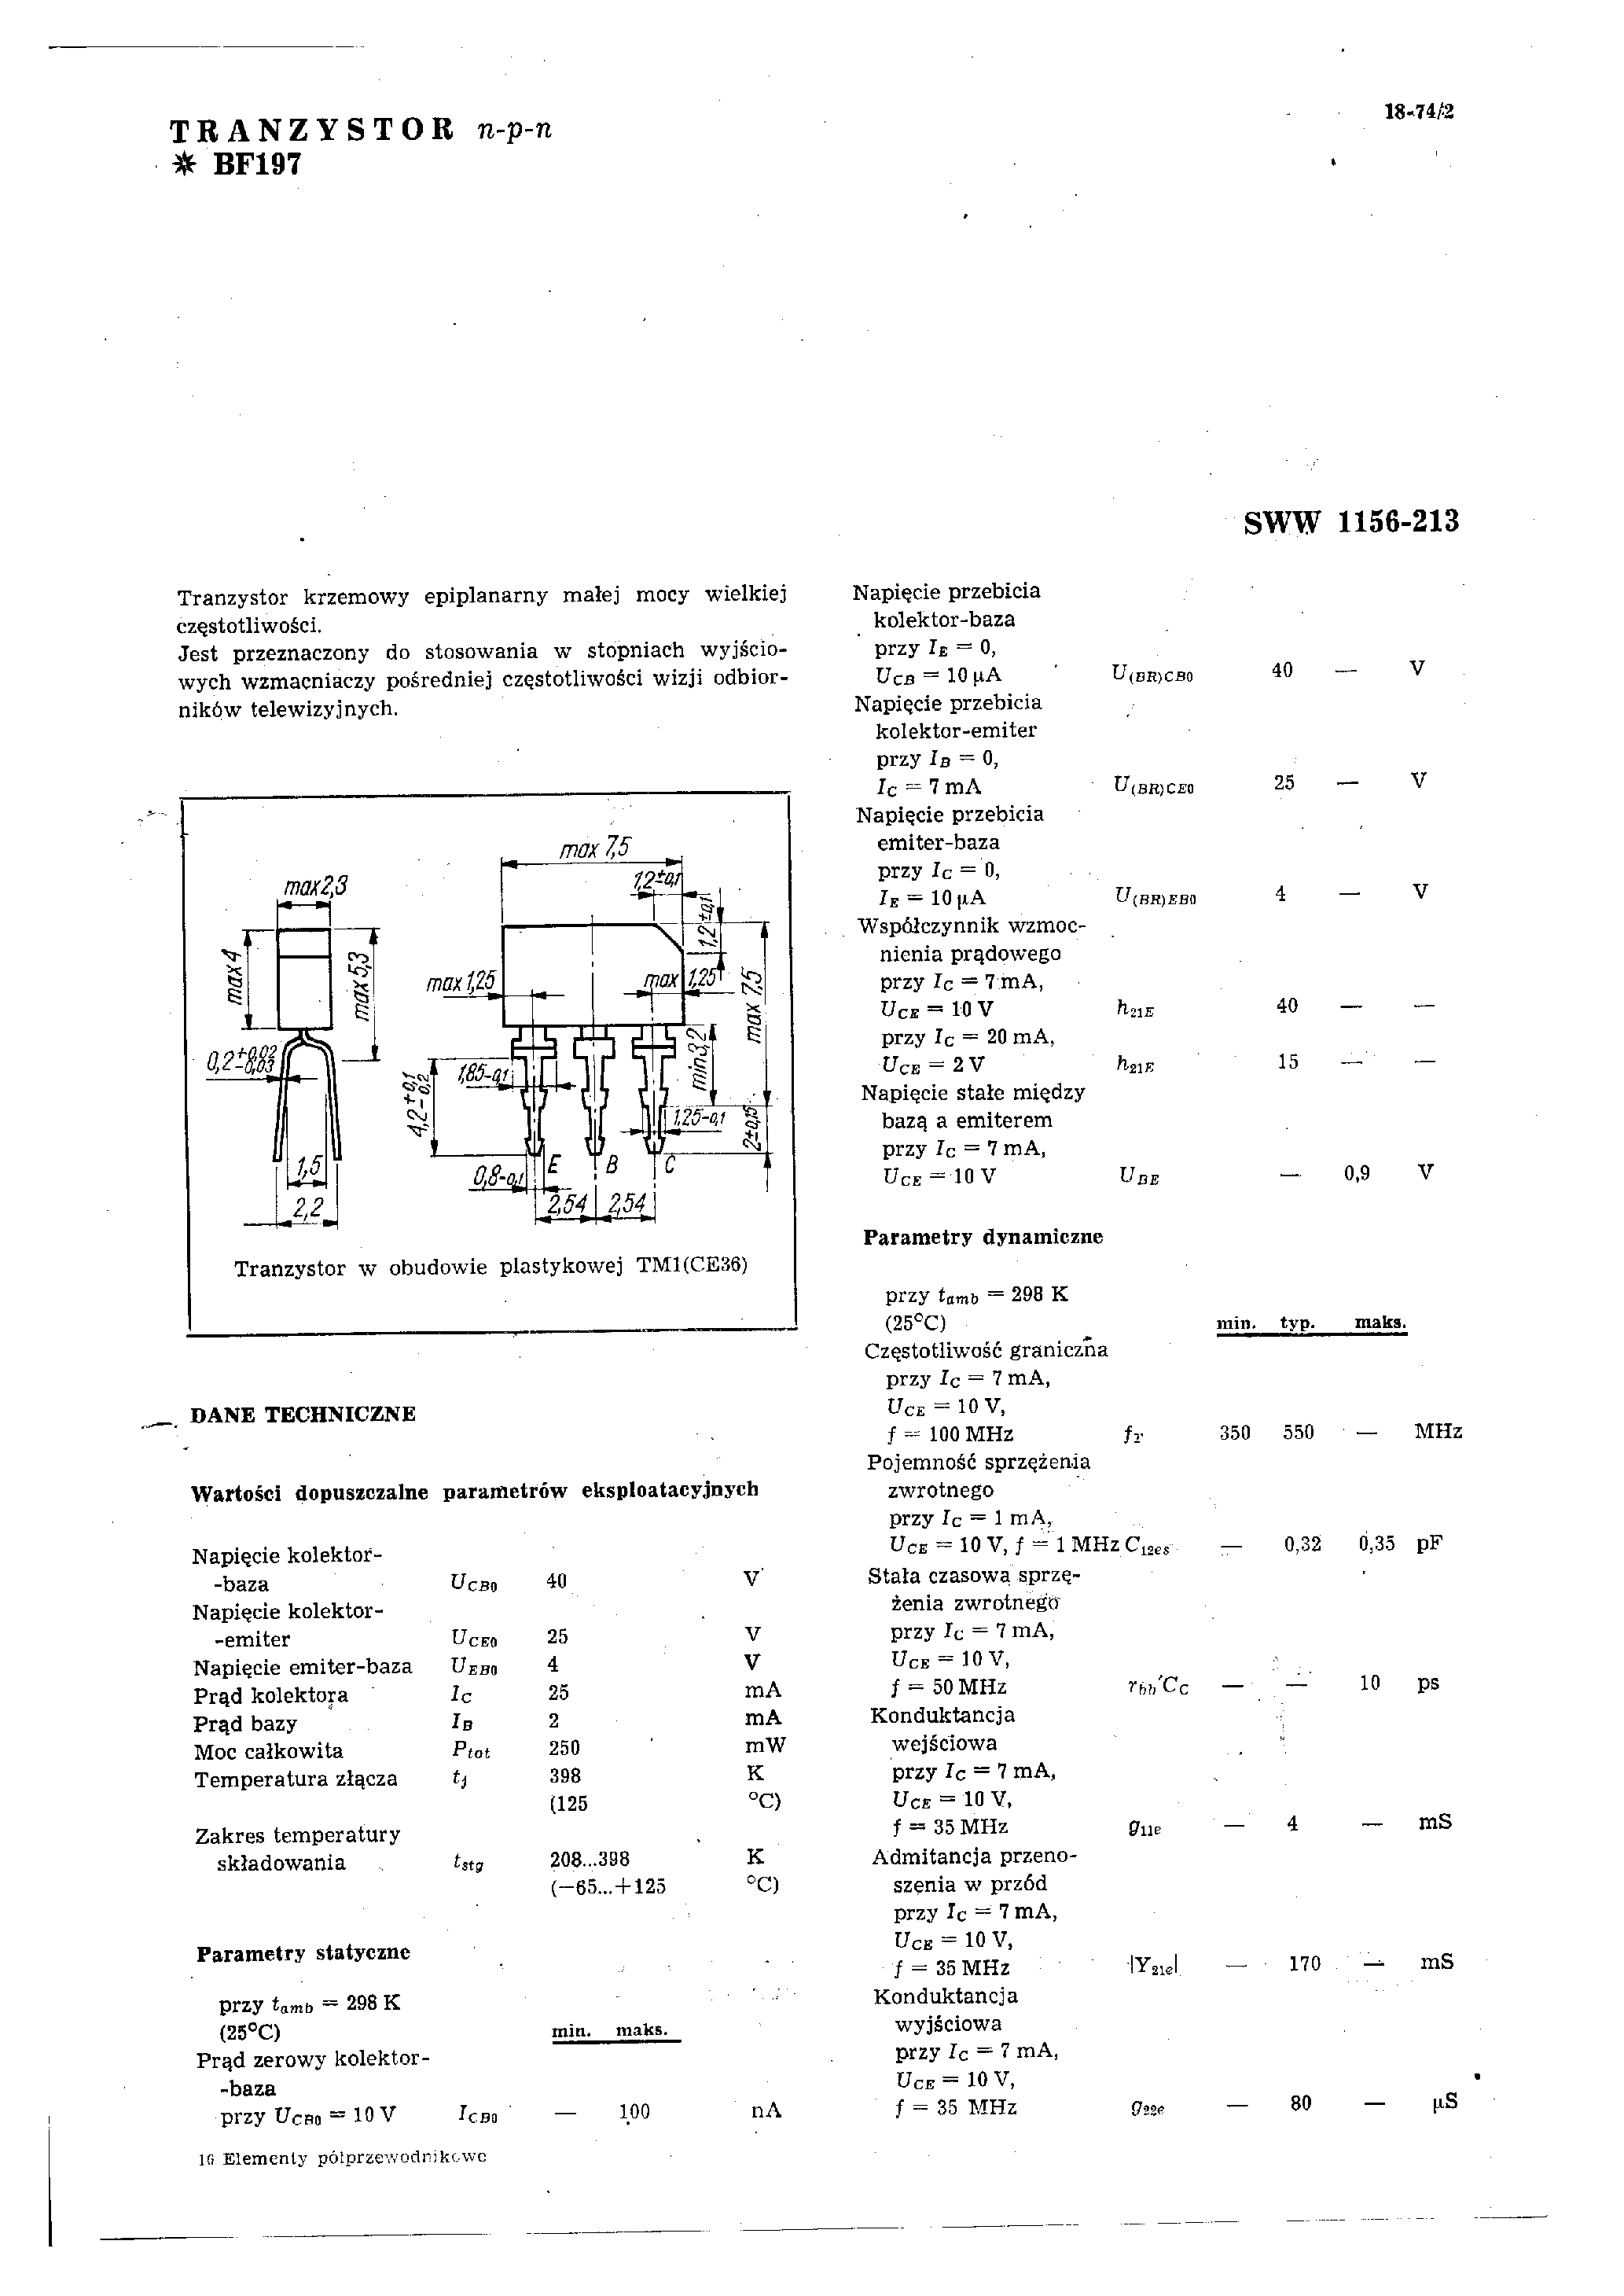 Datasheet BF197 - TRANZYSTOR NPN page 1